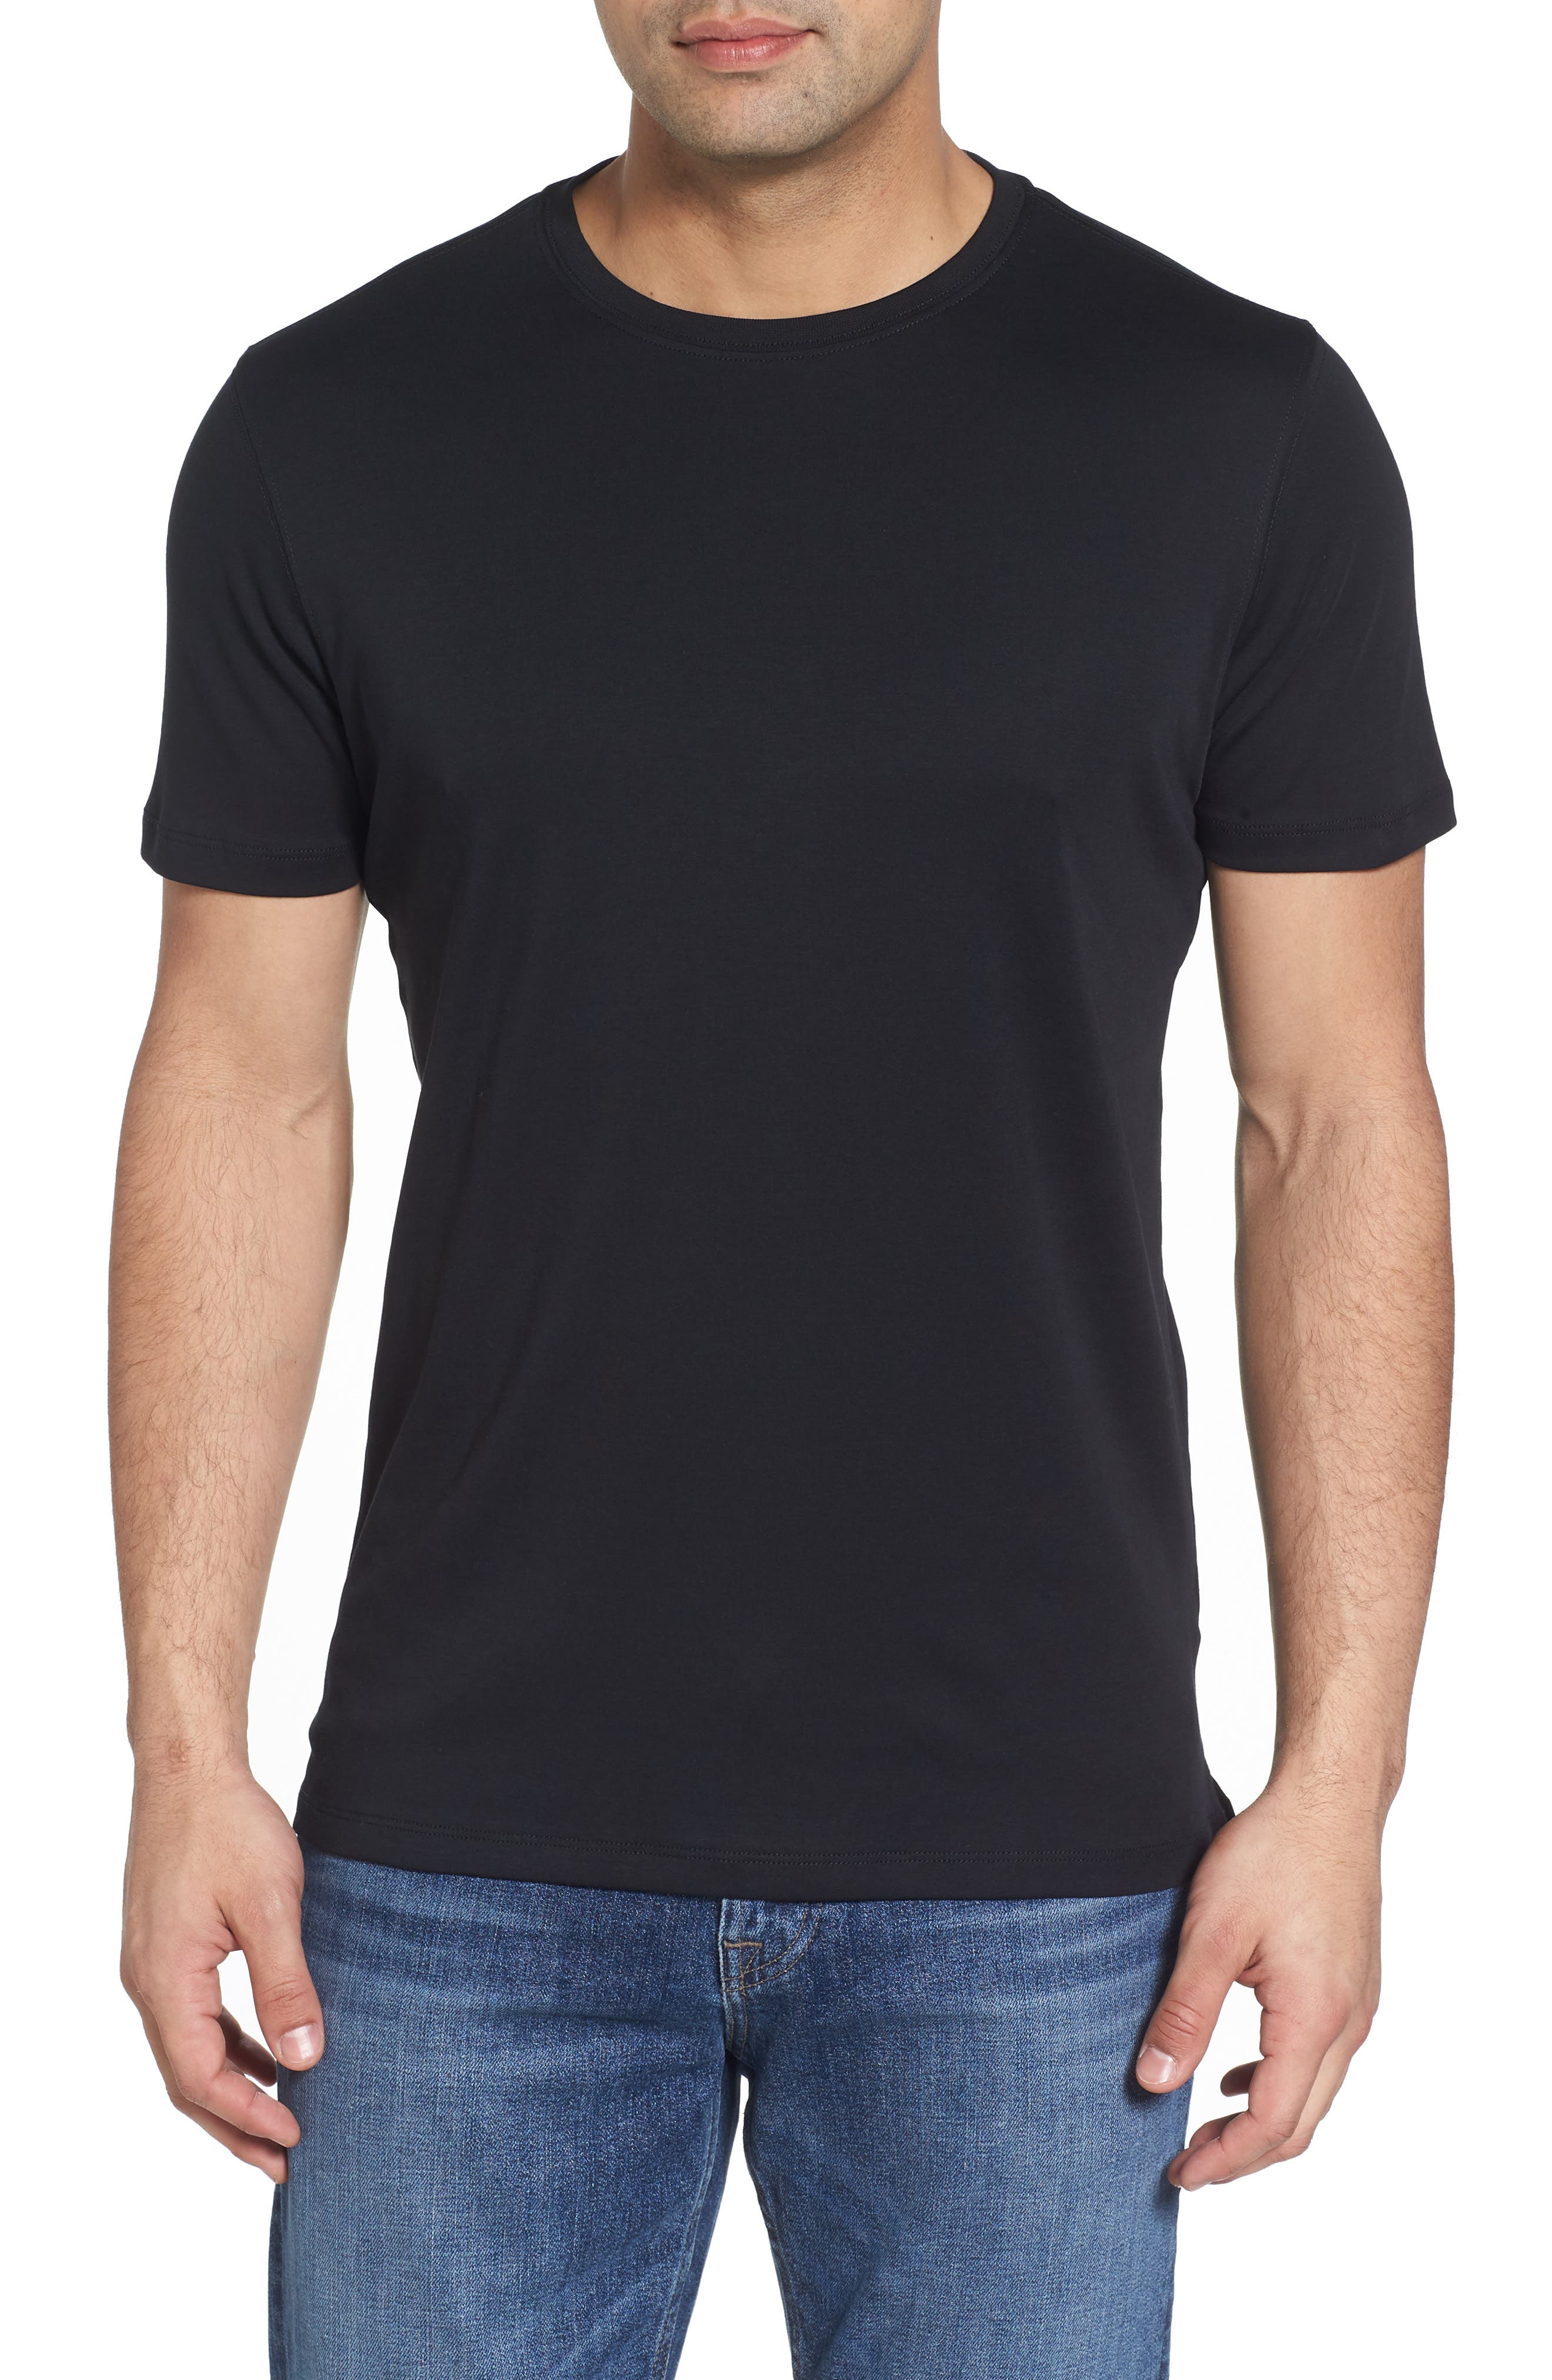 New Mens Crewneck 100% Cotton T-Shirt